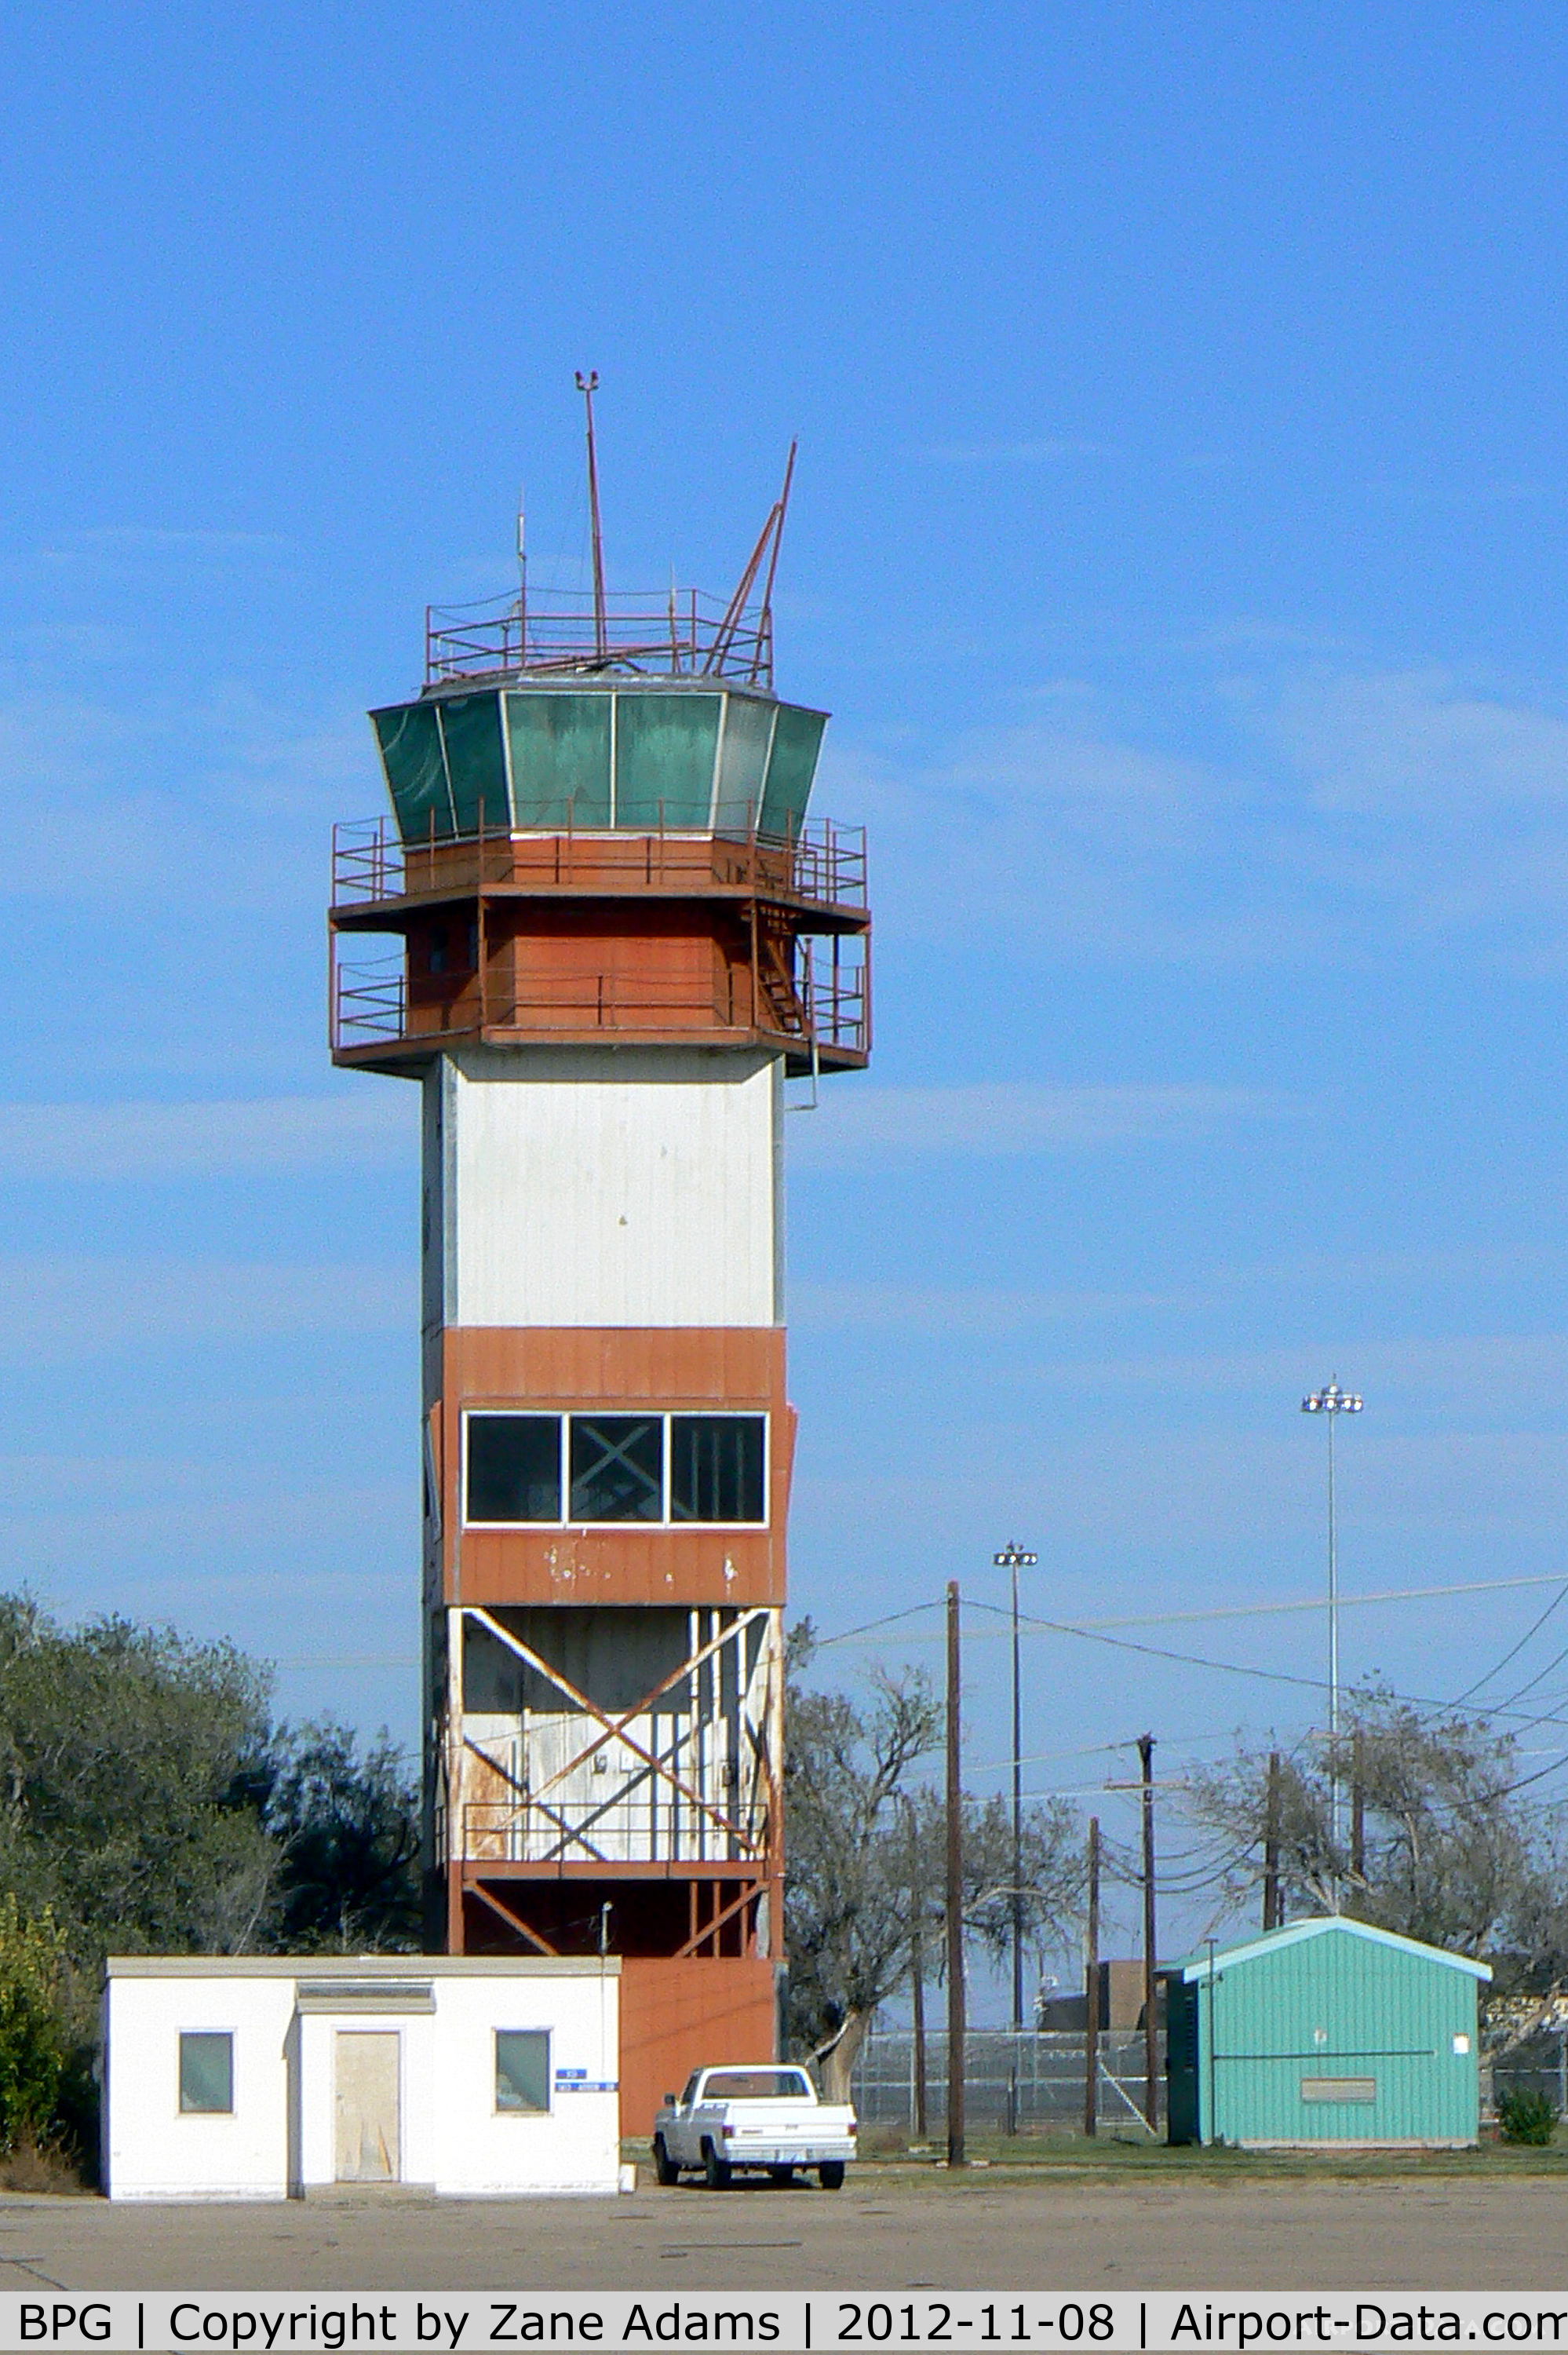 Big Spring Mc Mahon-wrinkle Airport (BPG) - The old Webb Air Force Base tower at Big Spring, TX